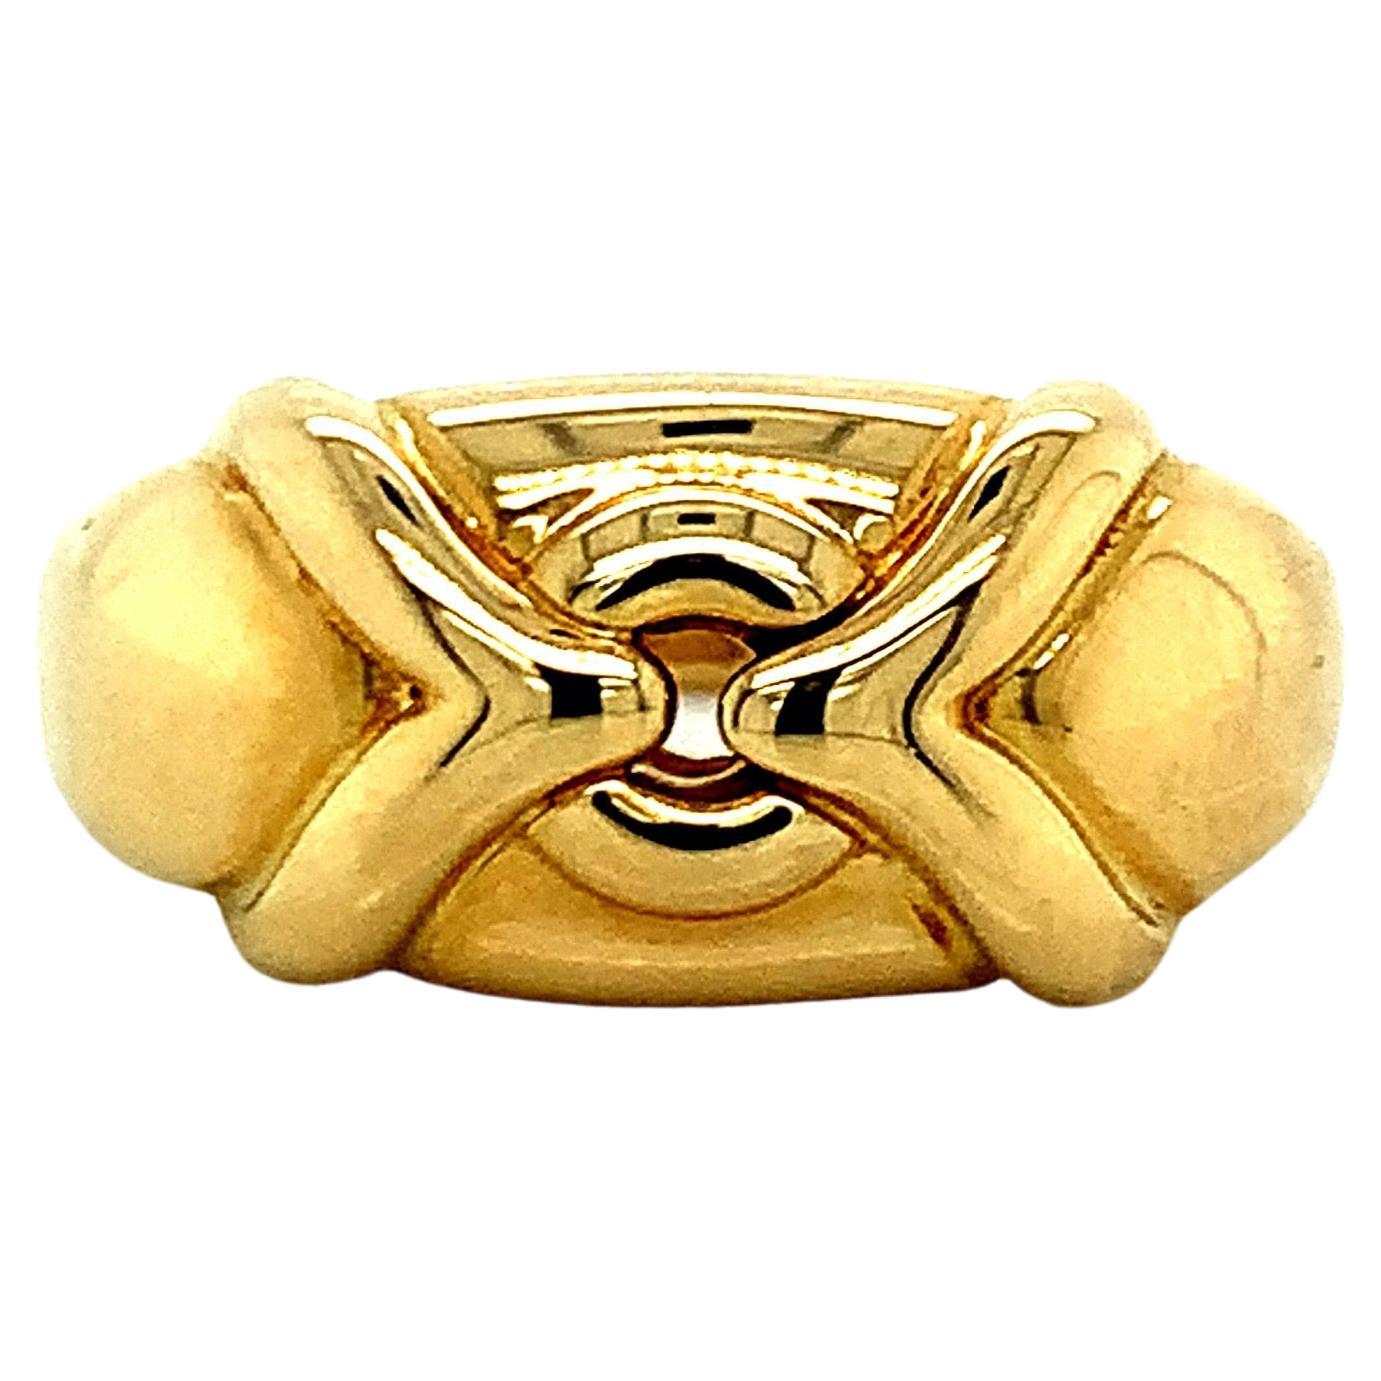 Bvlgari Yellow Gold Ring